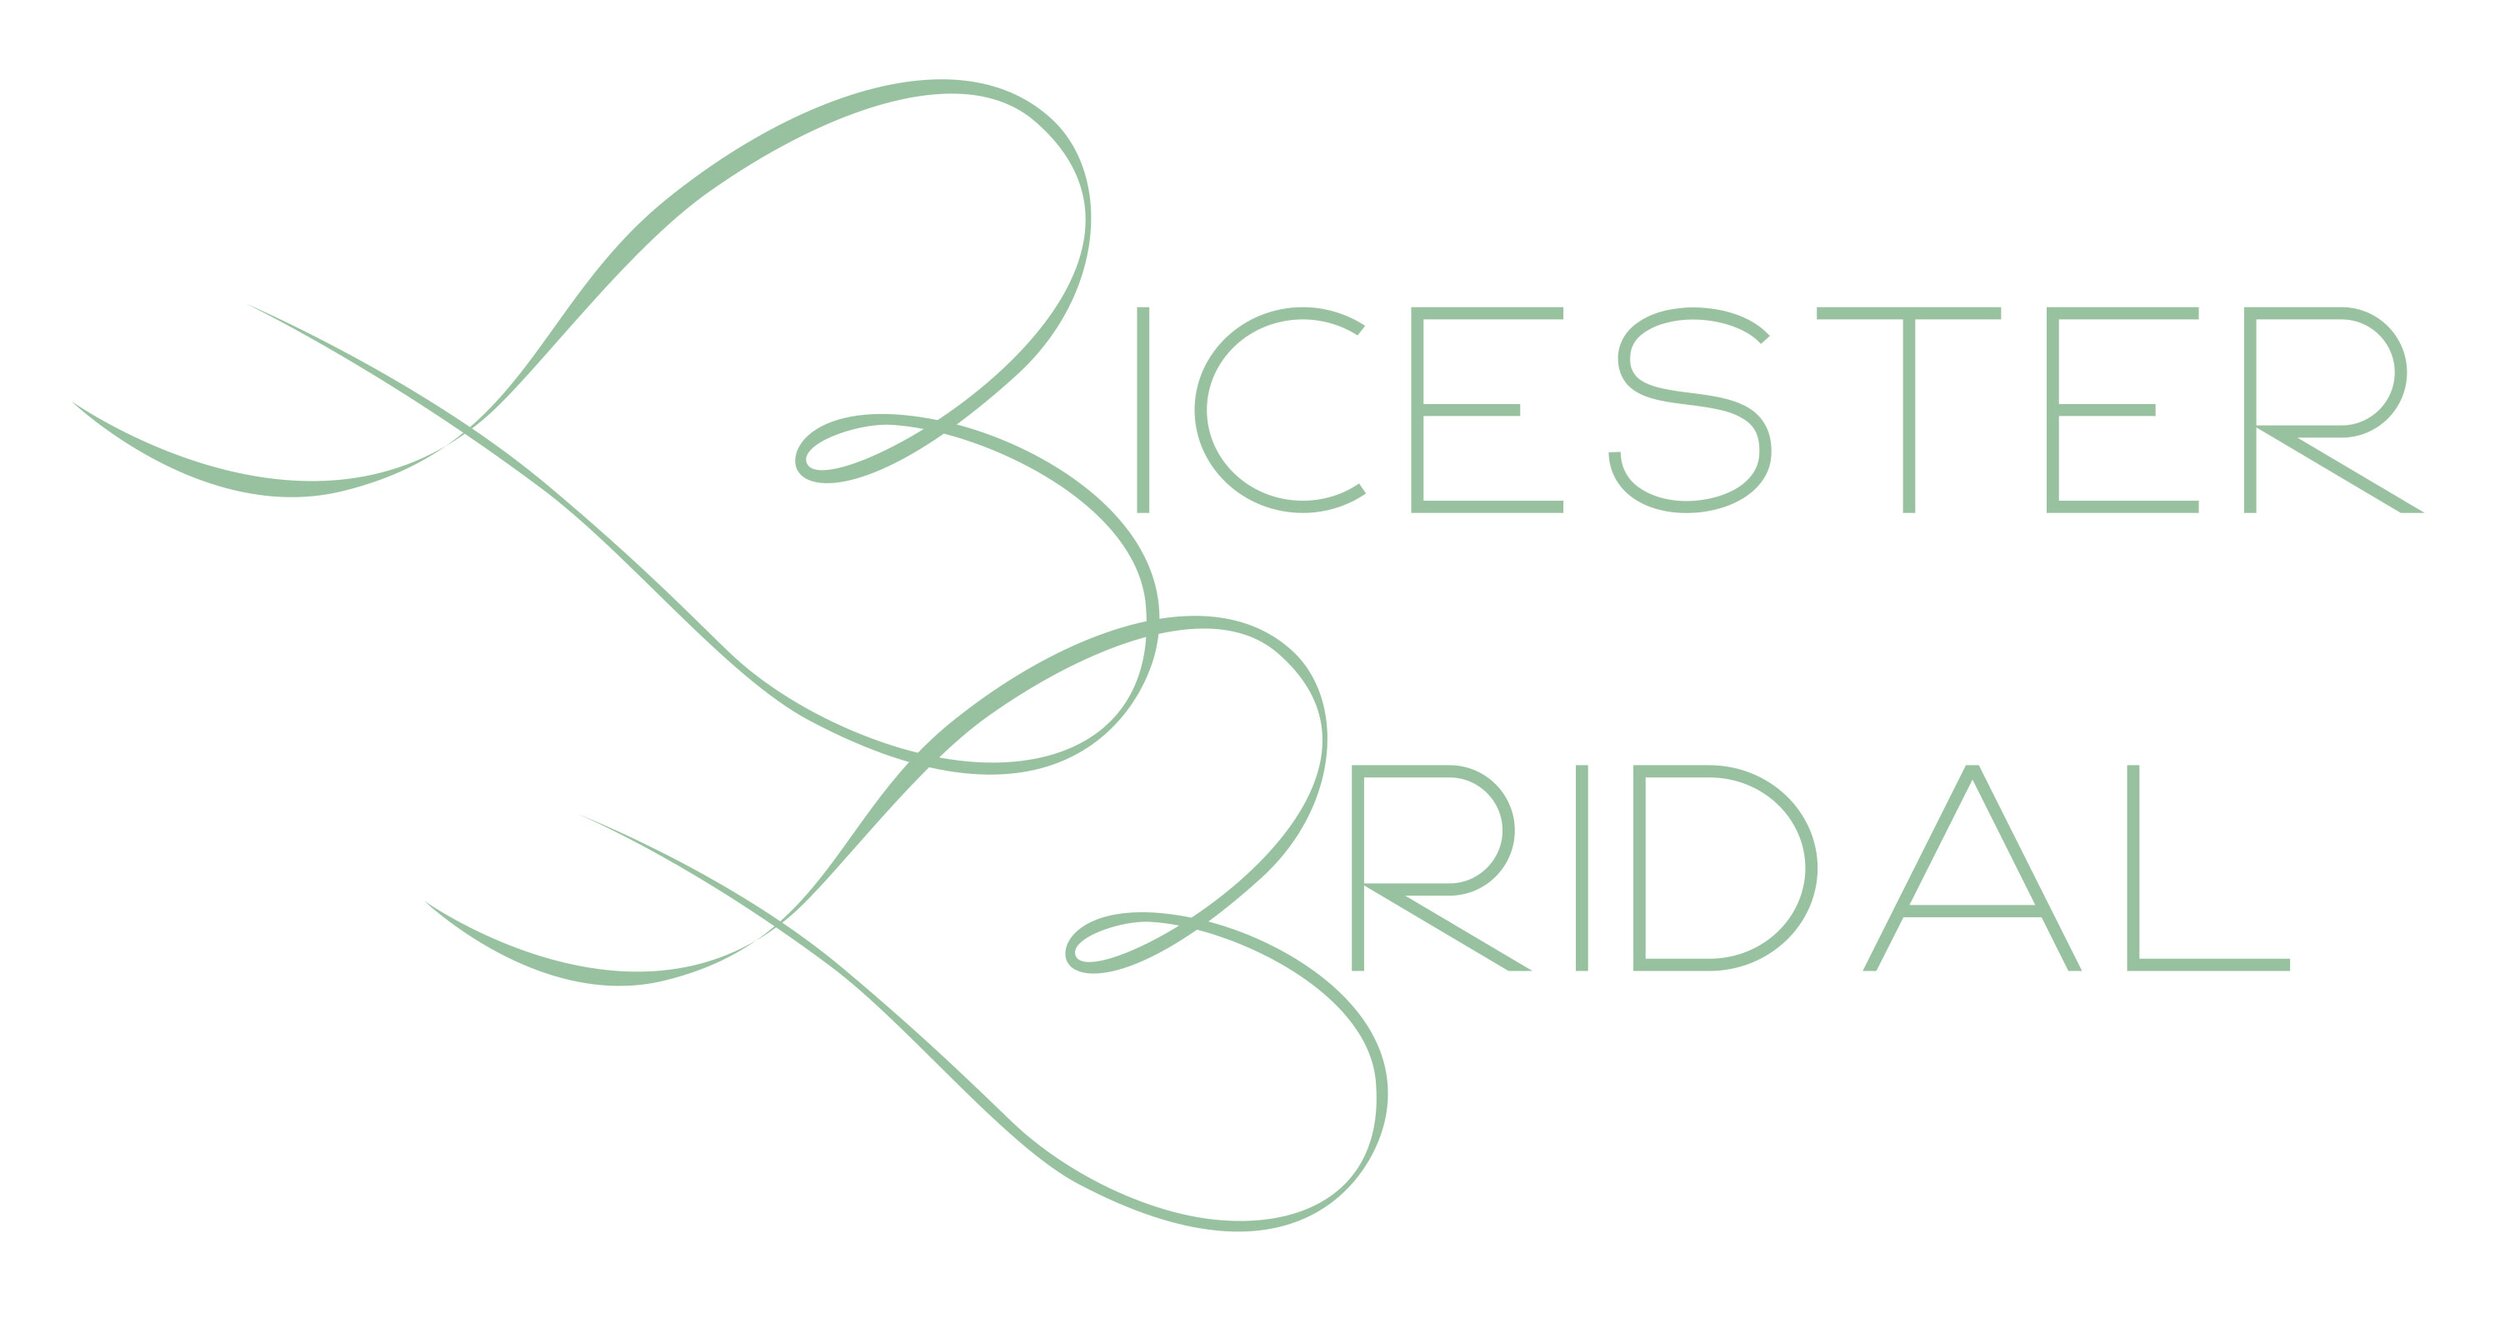 Bicester Bridal logo.jpg